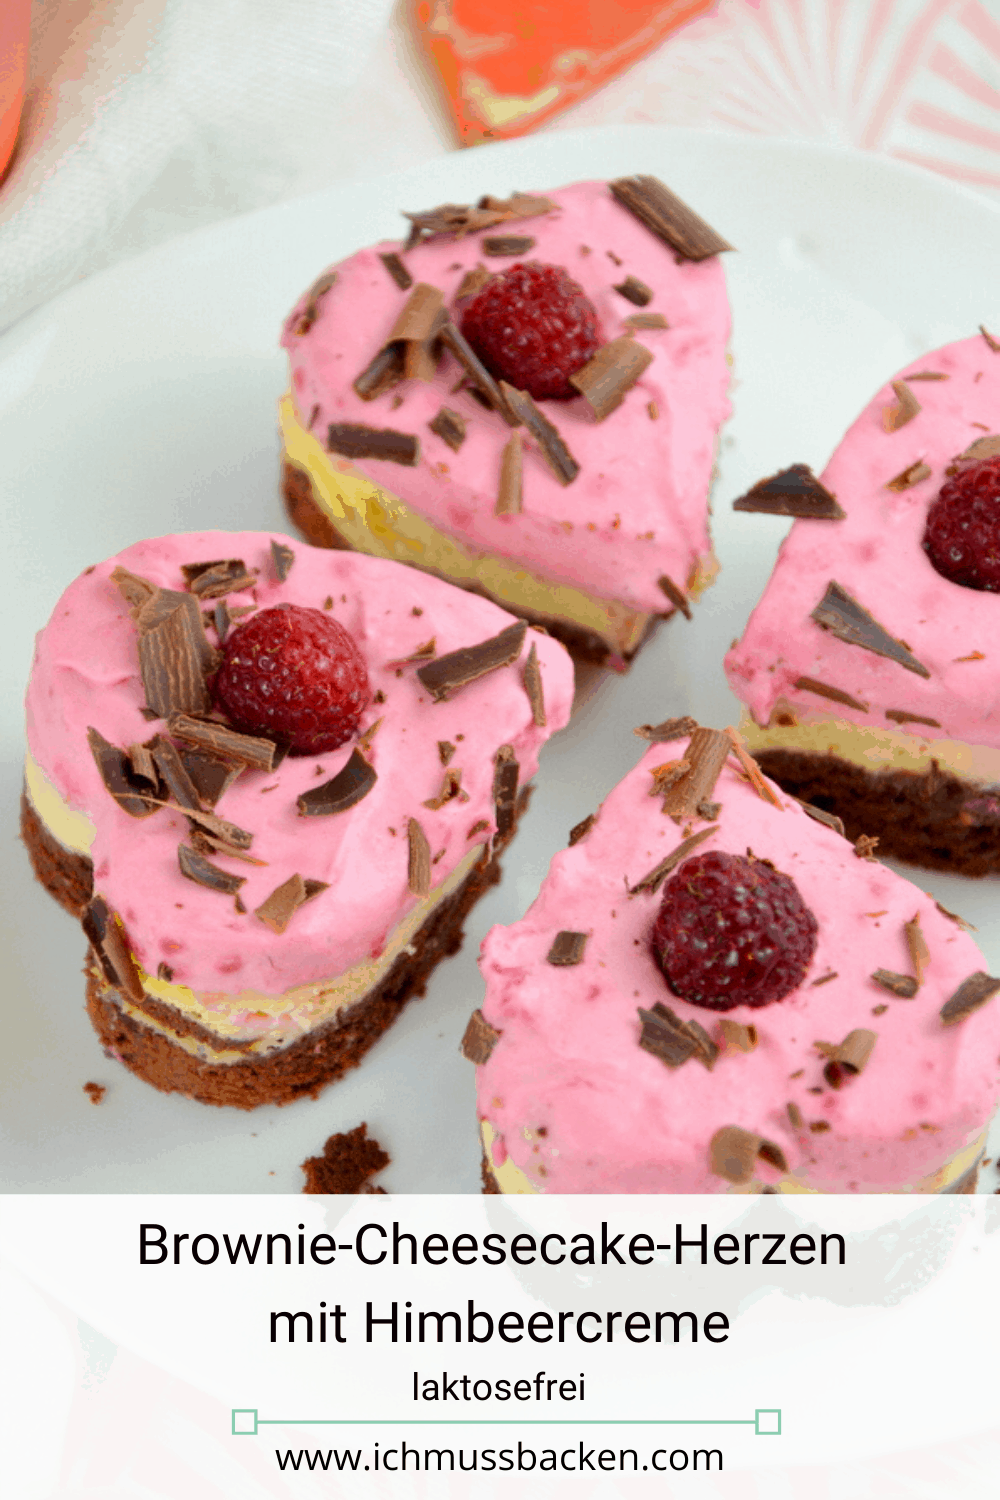 Brownie-Cheesecake-Herzen mit Himbeercreme